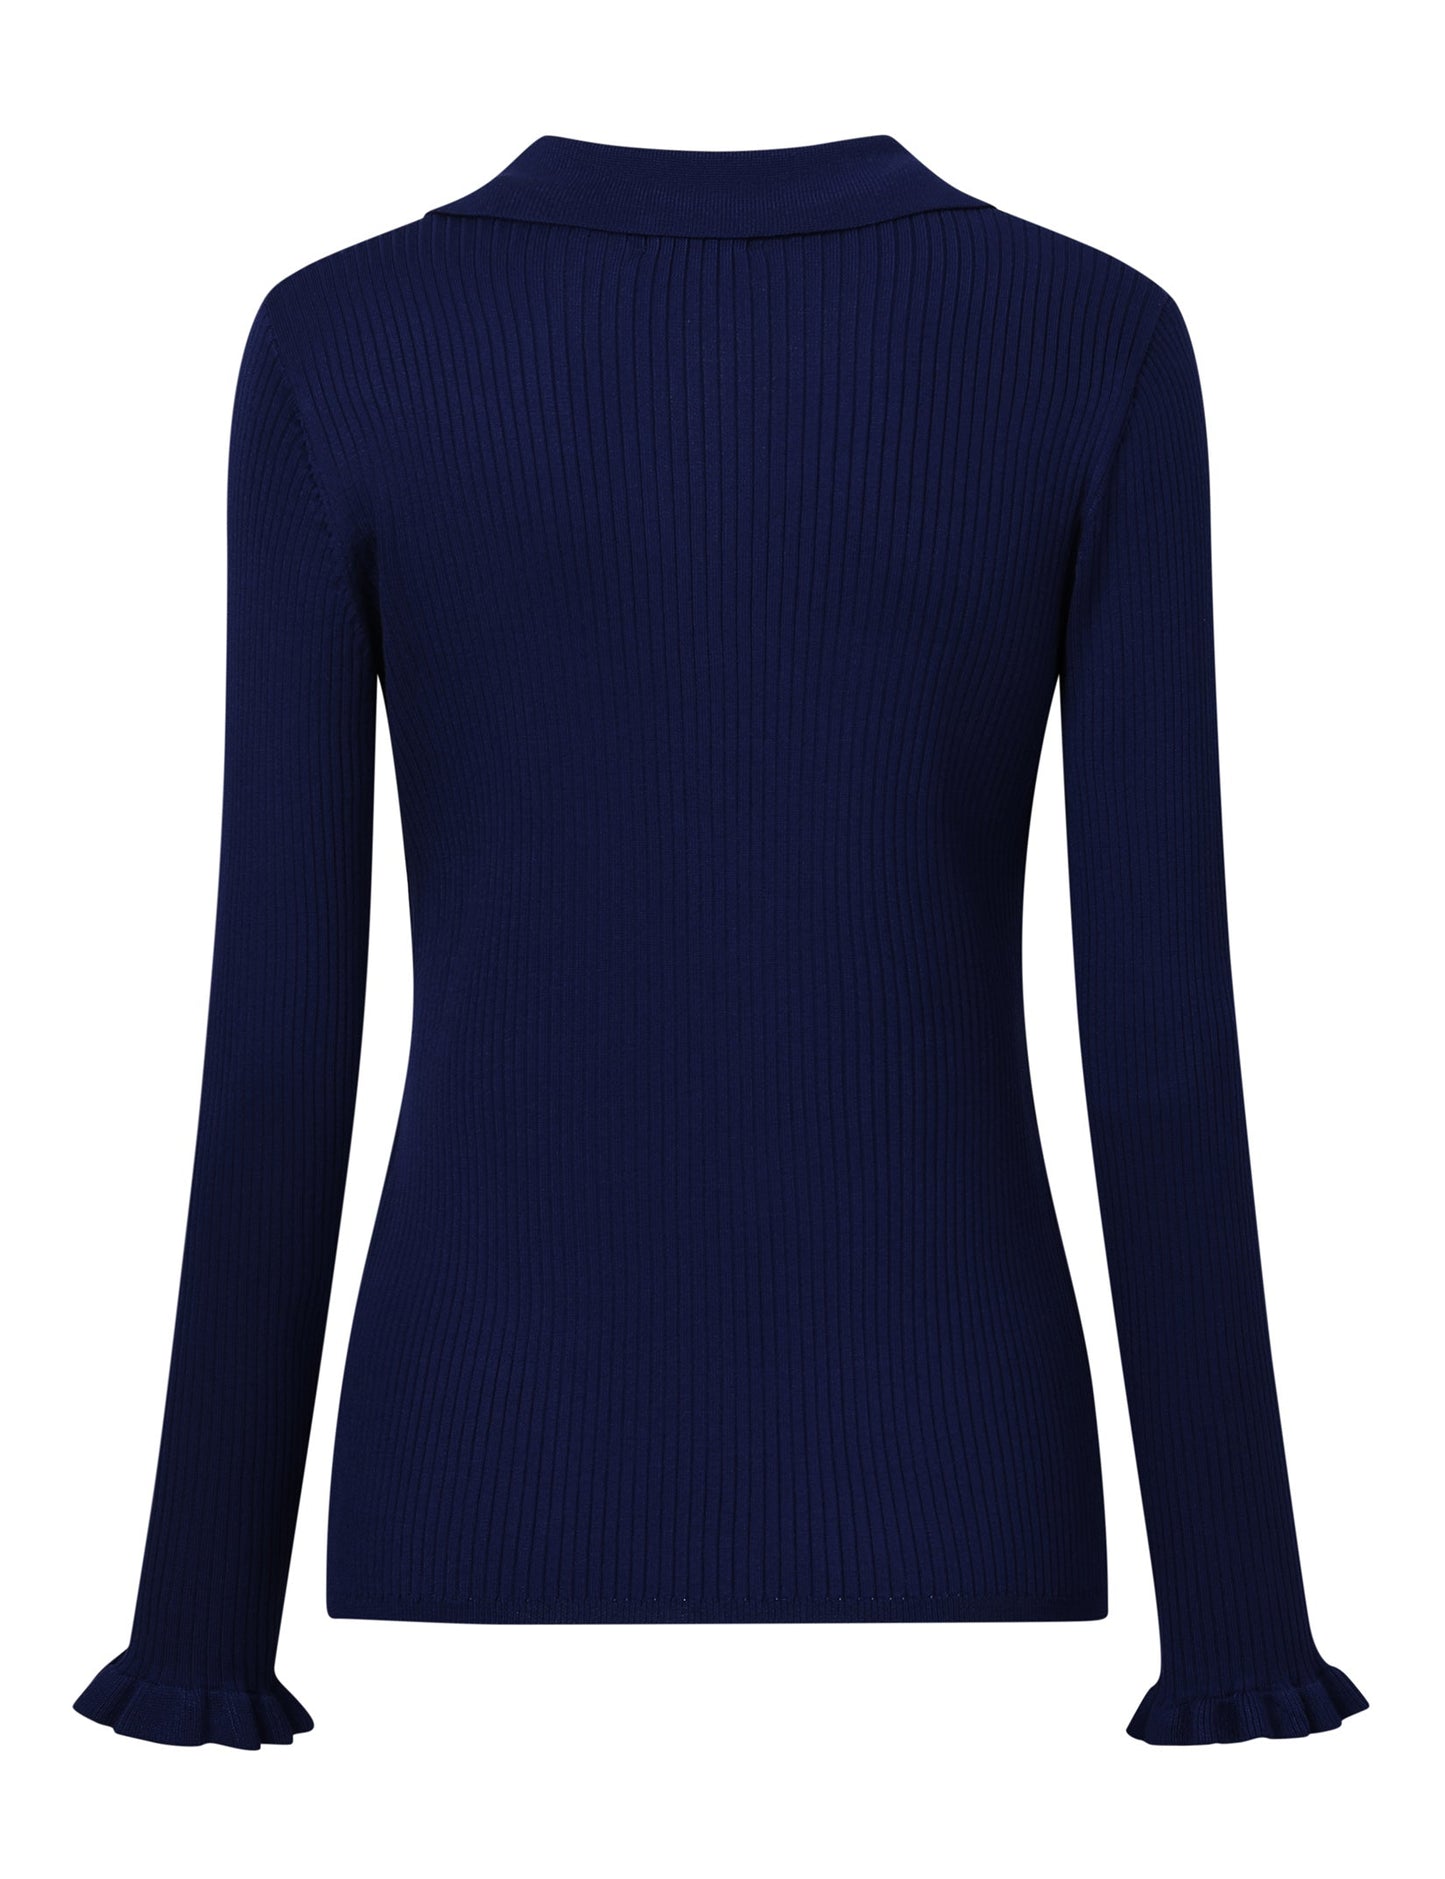 YESFASHION Women's Off Shoulder Top Long Sleeve T-Shirt Blue